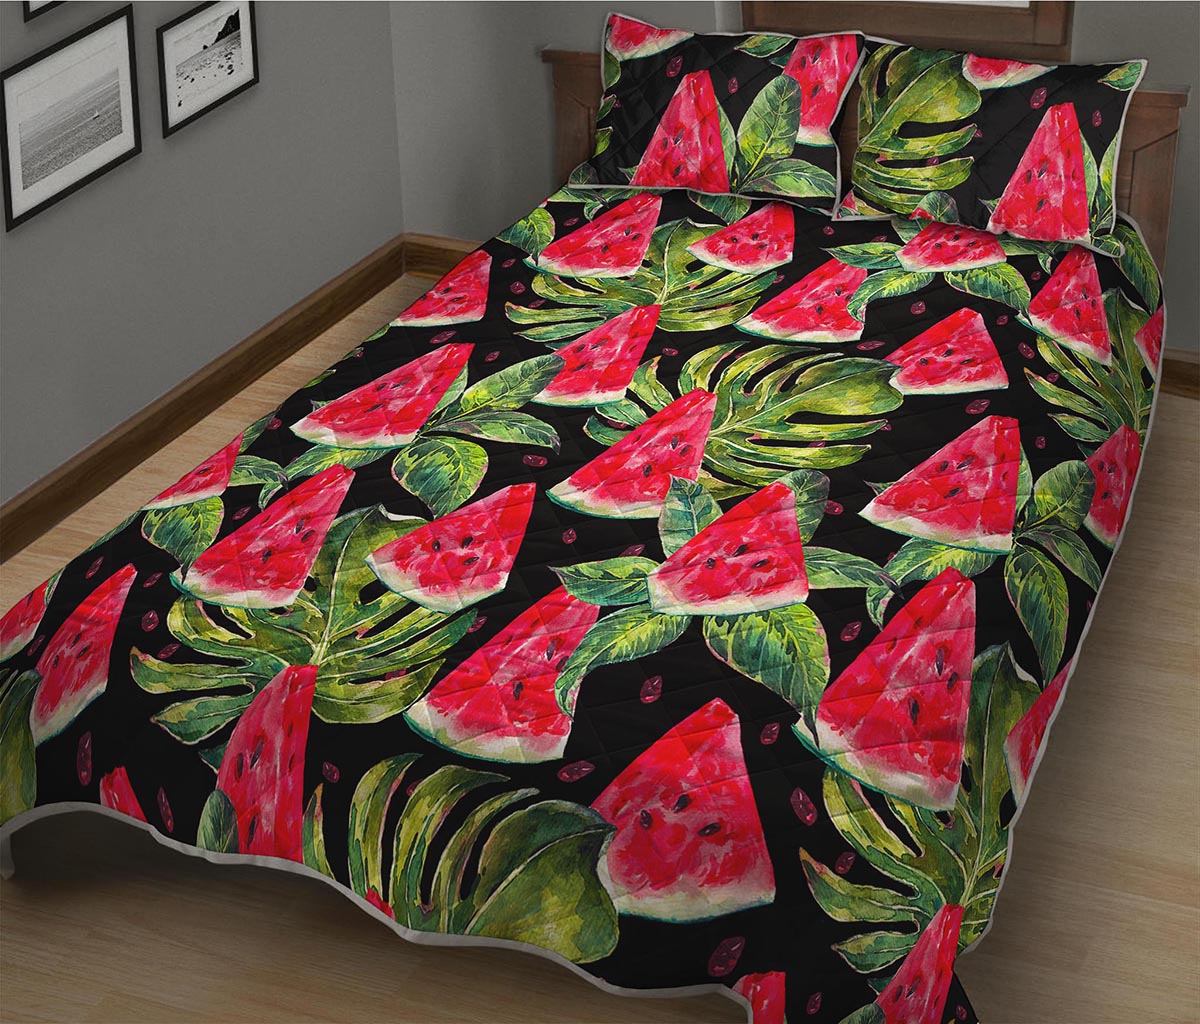 Black Palm Leaf Watermelon Pattern Print Quilt Bed Set